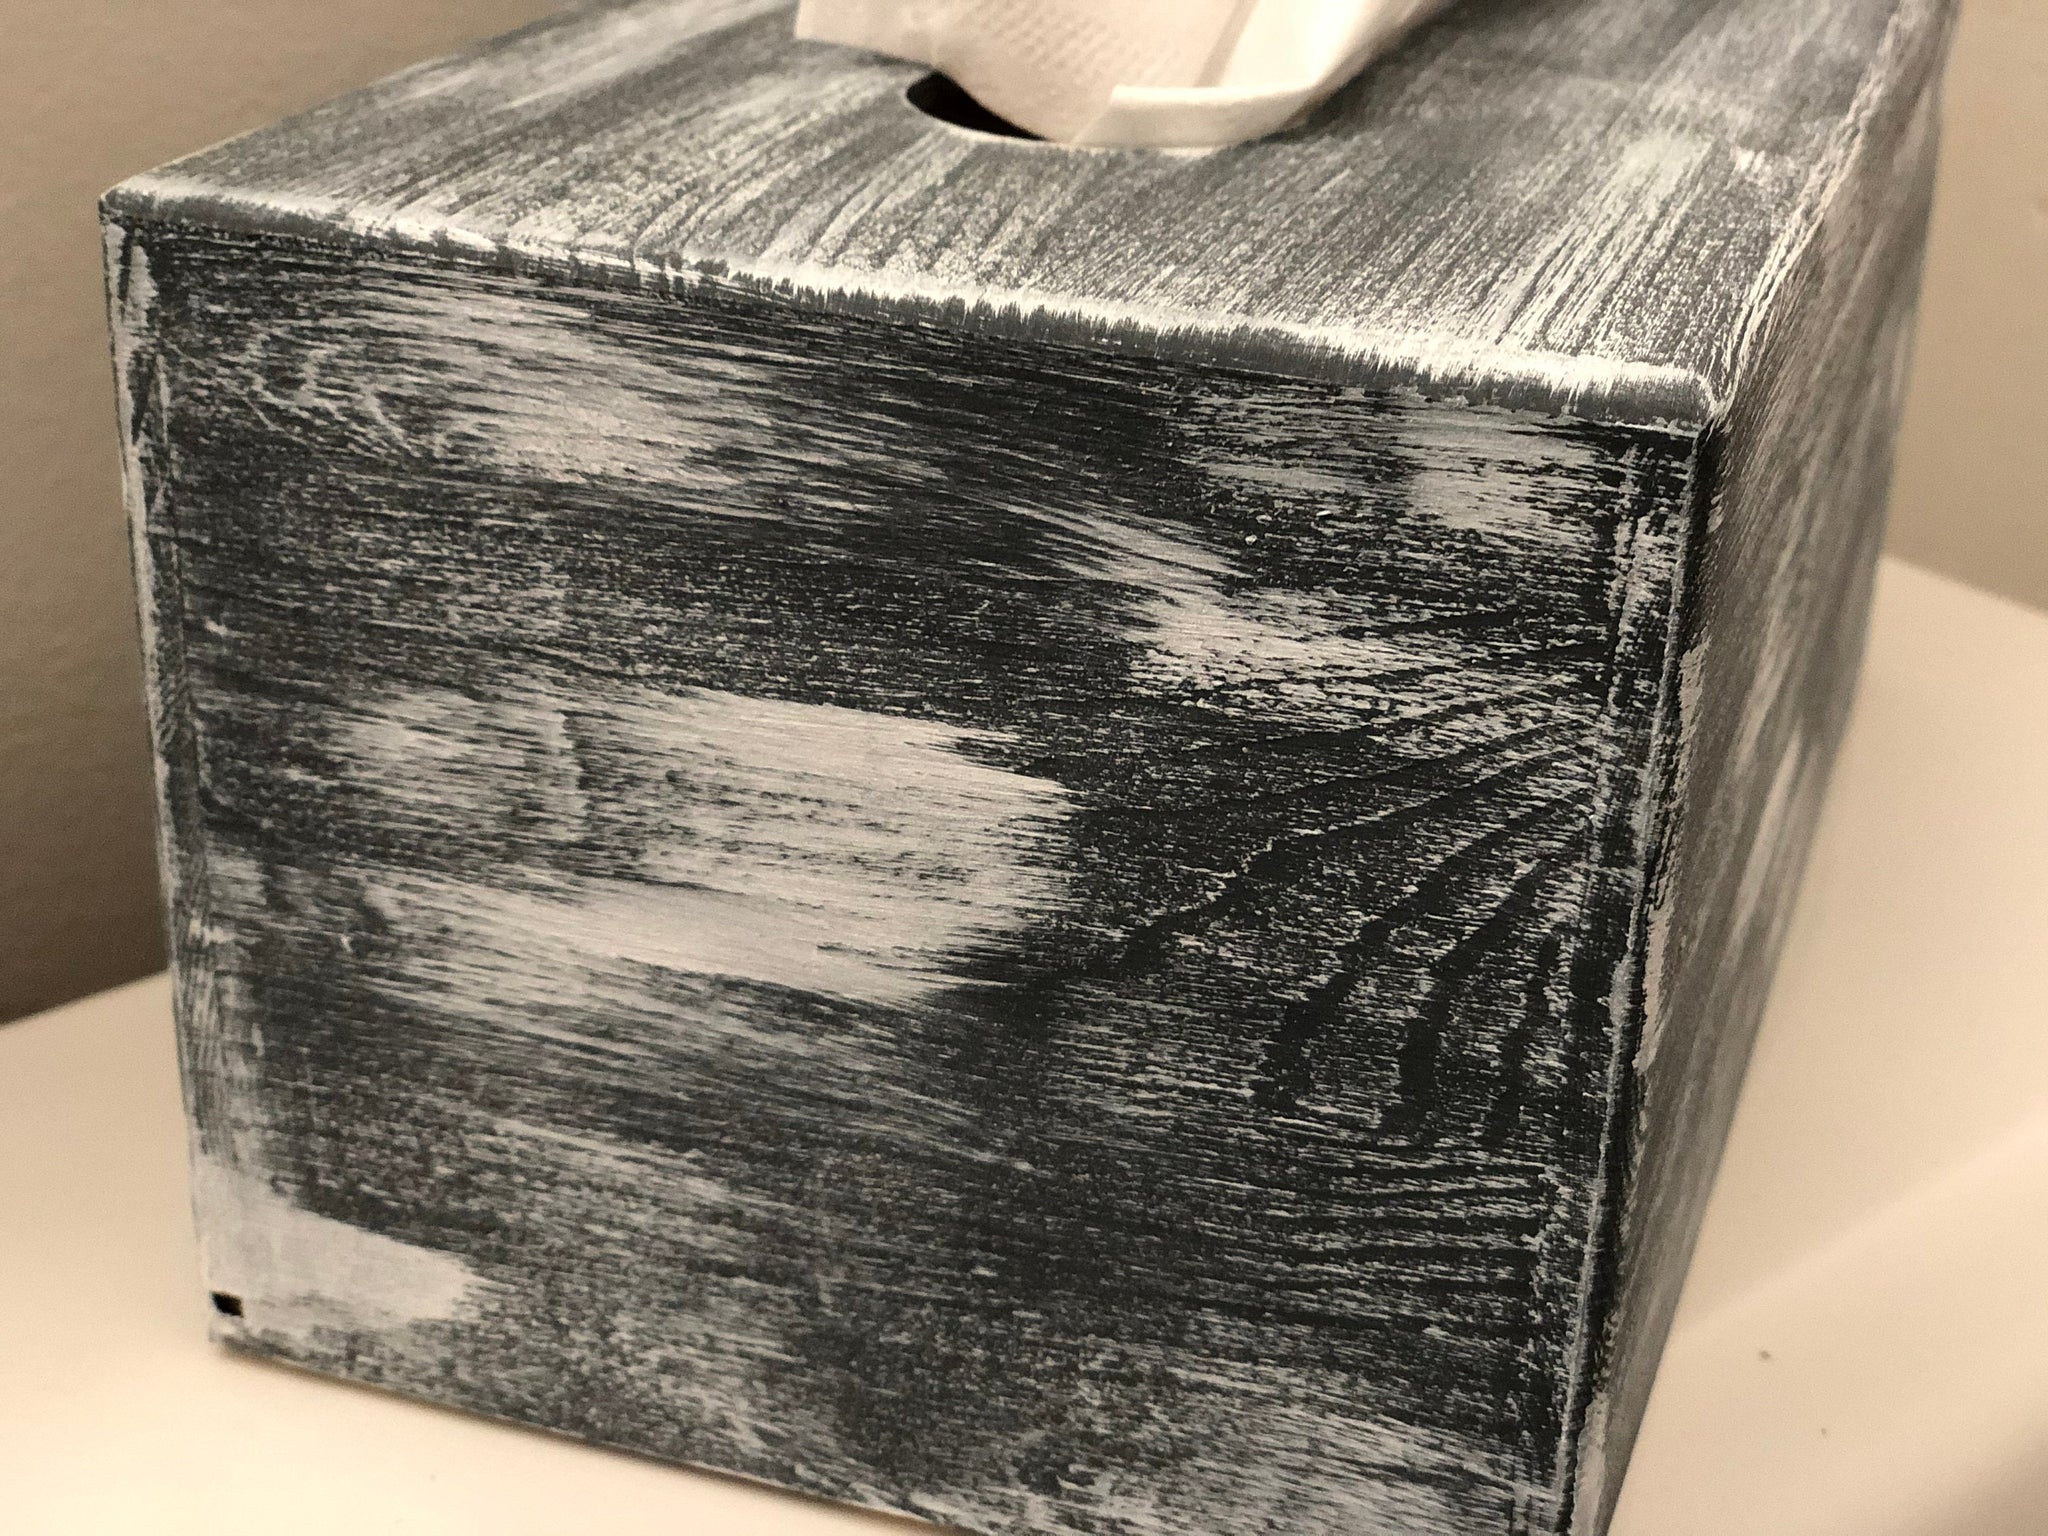 Wood Tissue Box Cover Rectangular - Rustic Farmhouse White Wooden